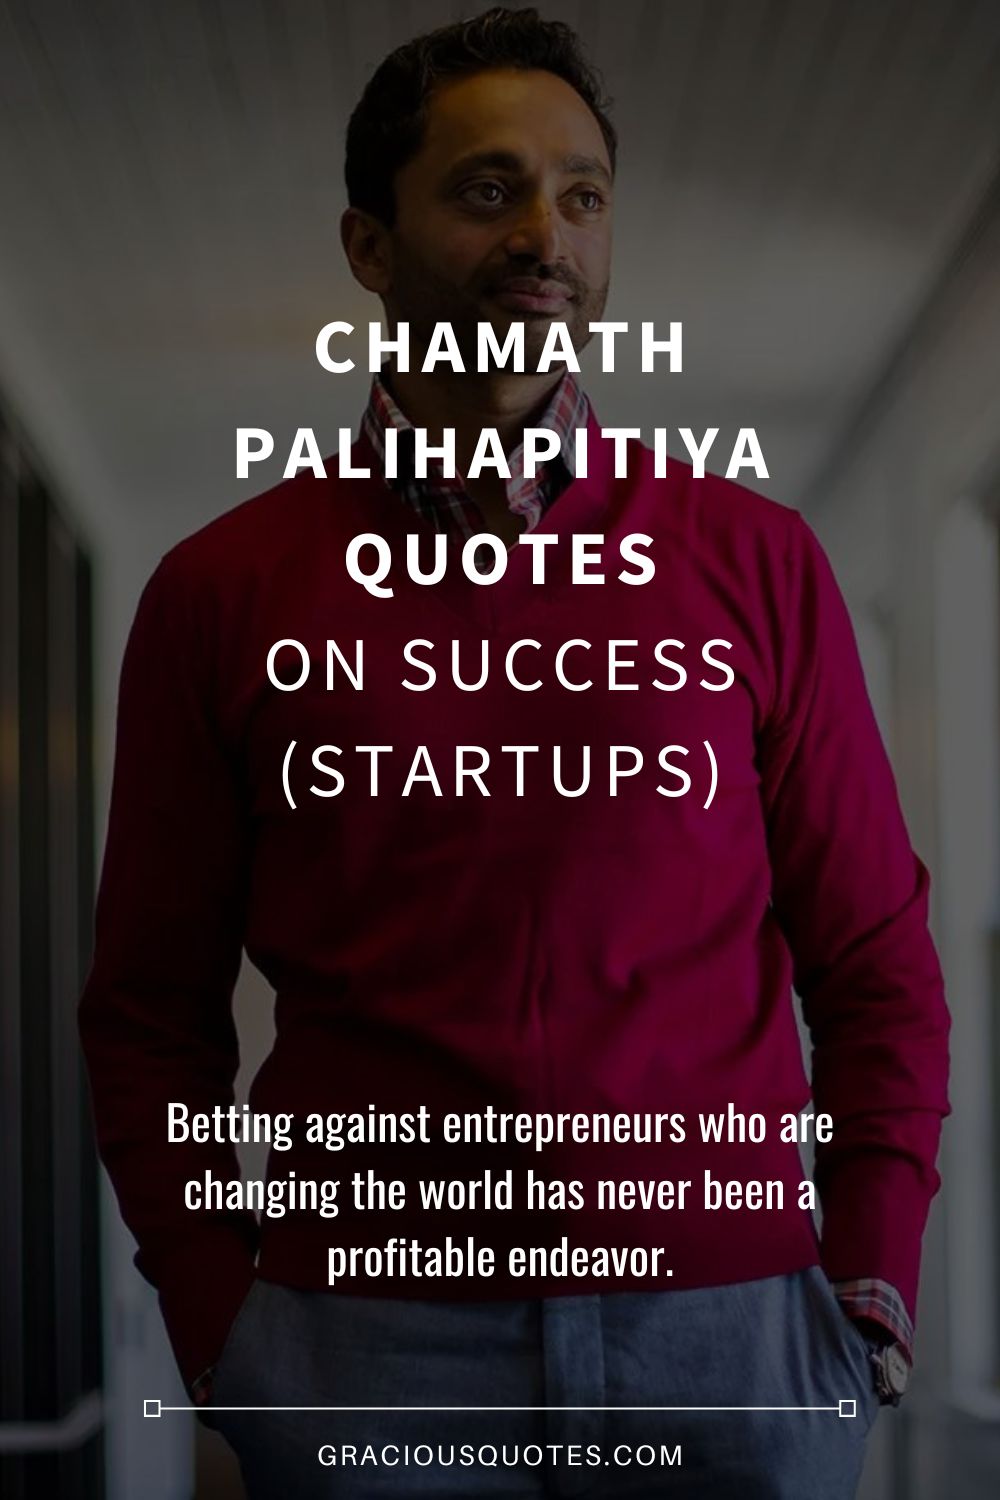 Chamath Palihapitiya Quotes on Success (STARTUPS) - Gracious Quotes